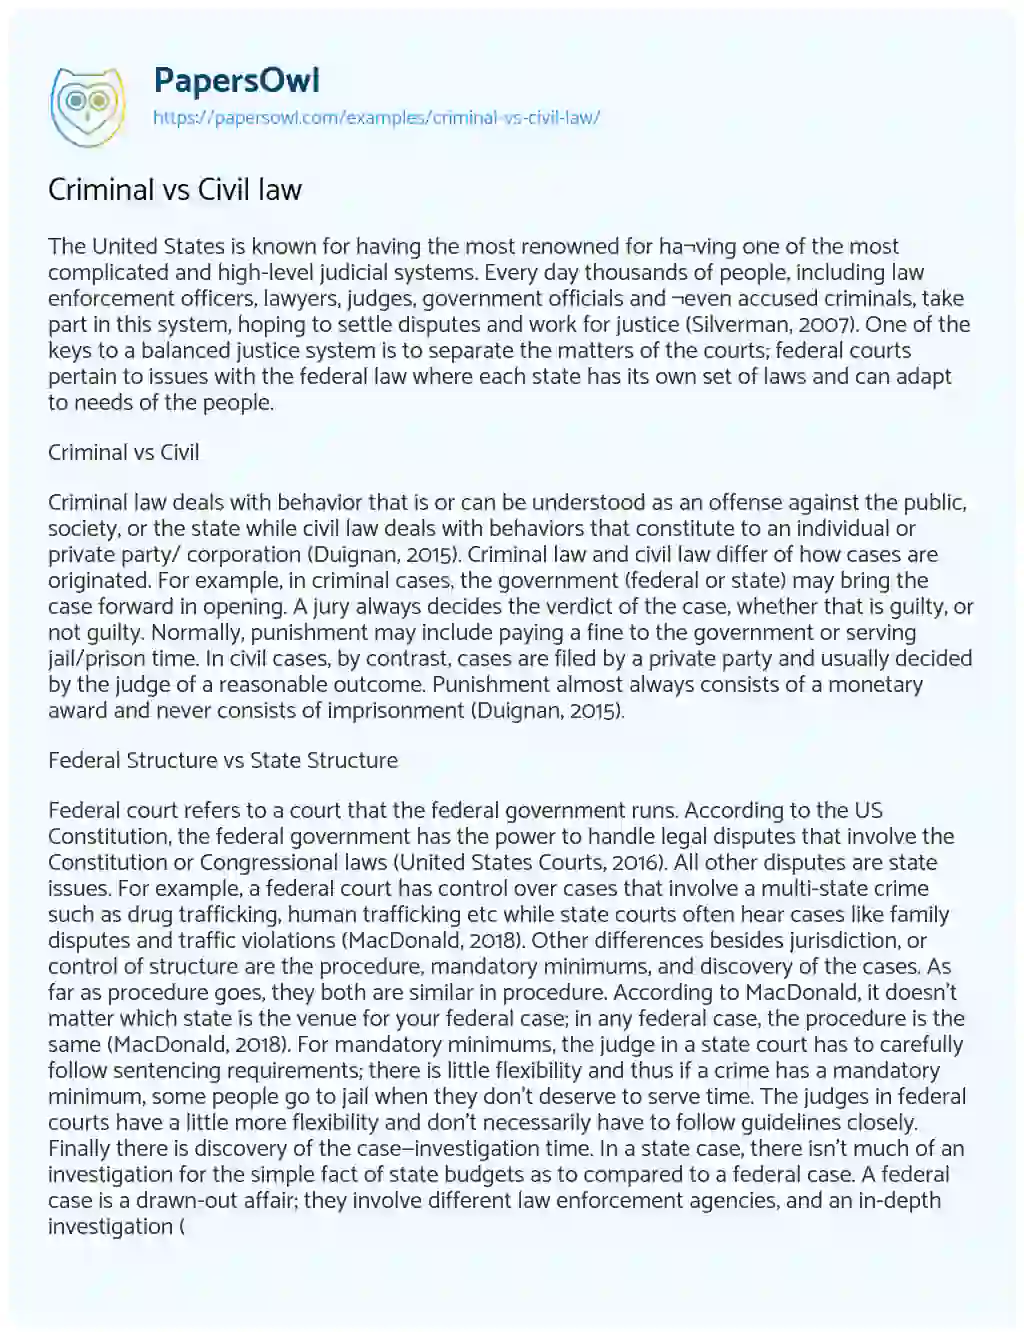 Criminal Vs .Civil Law essay